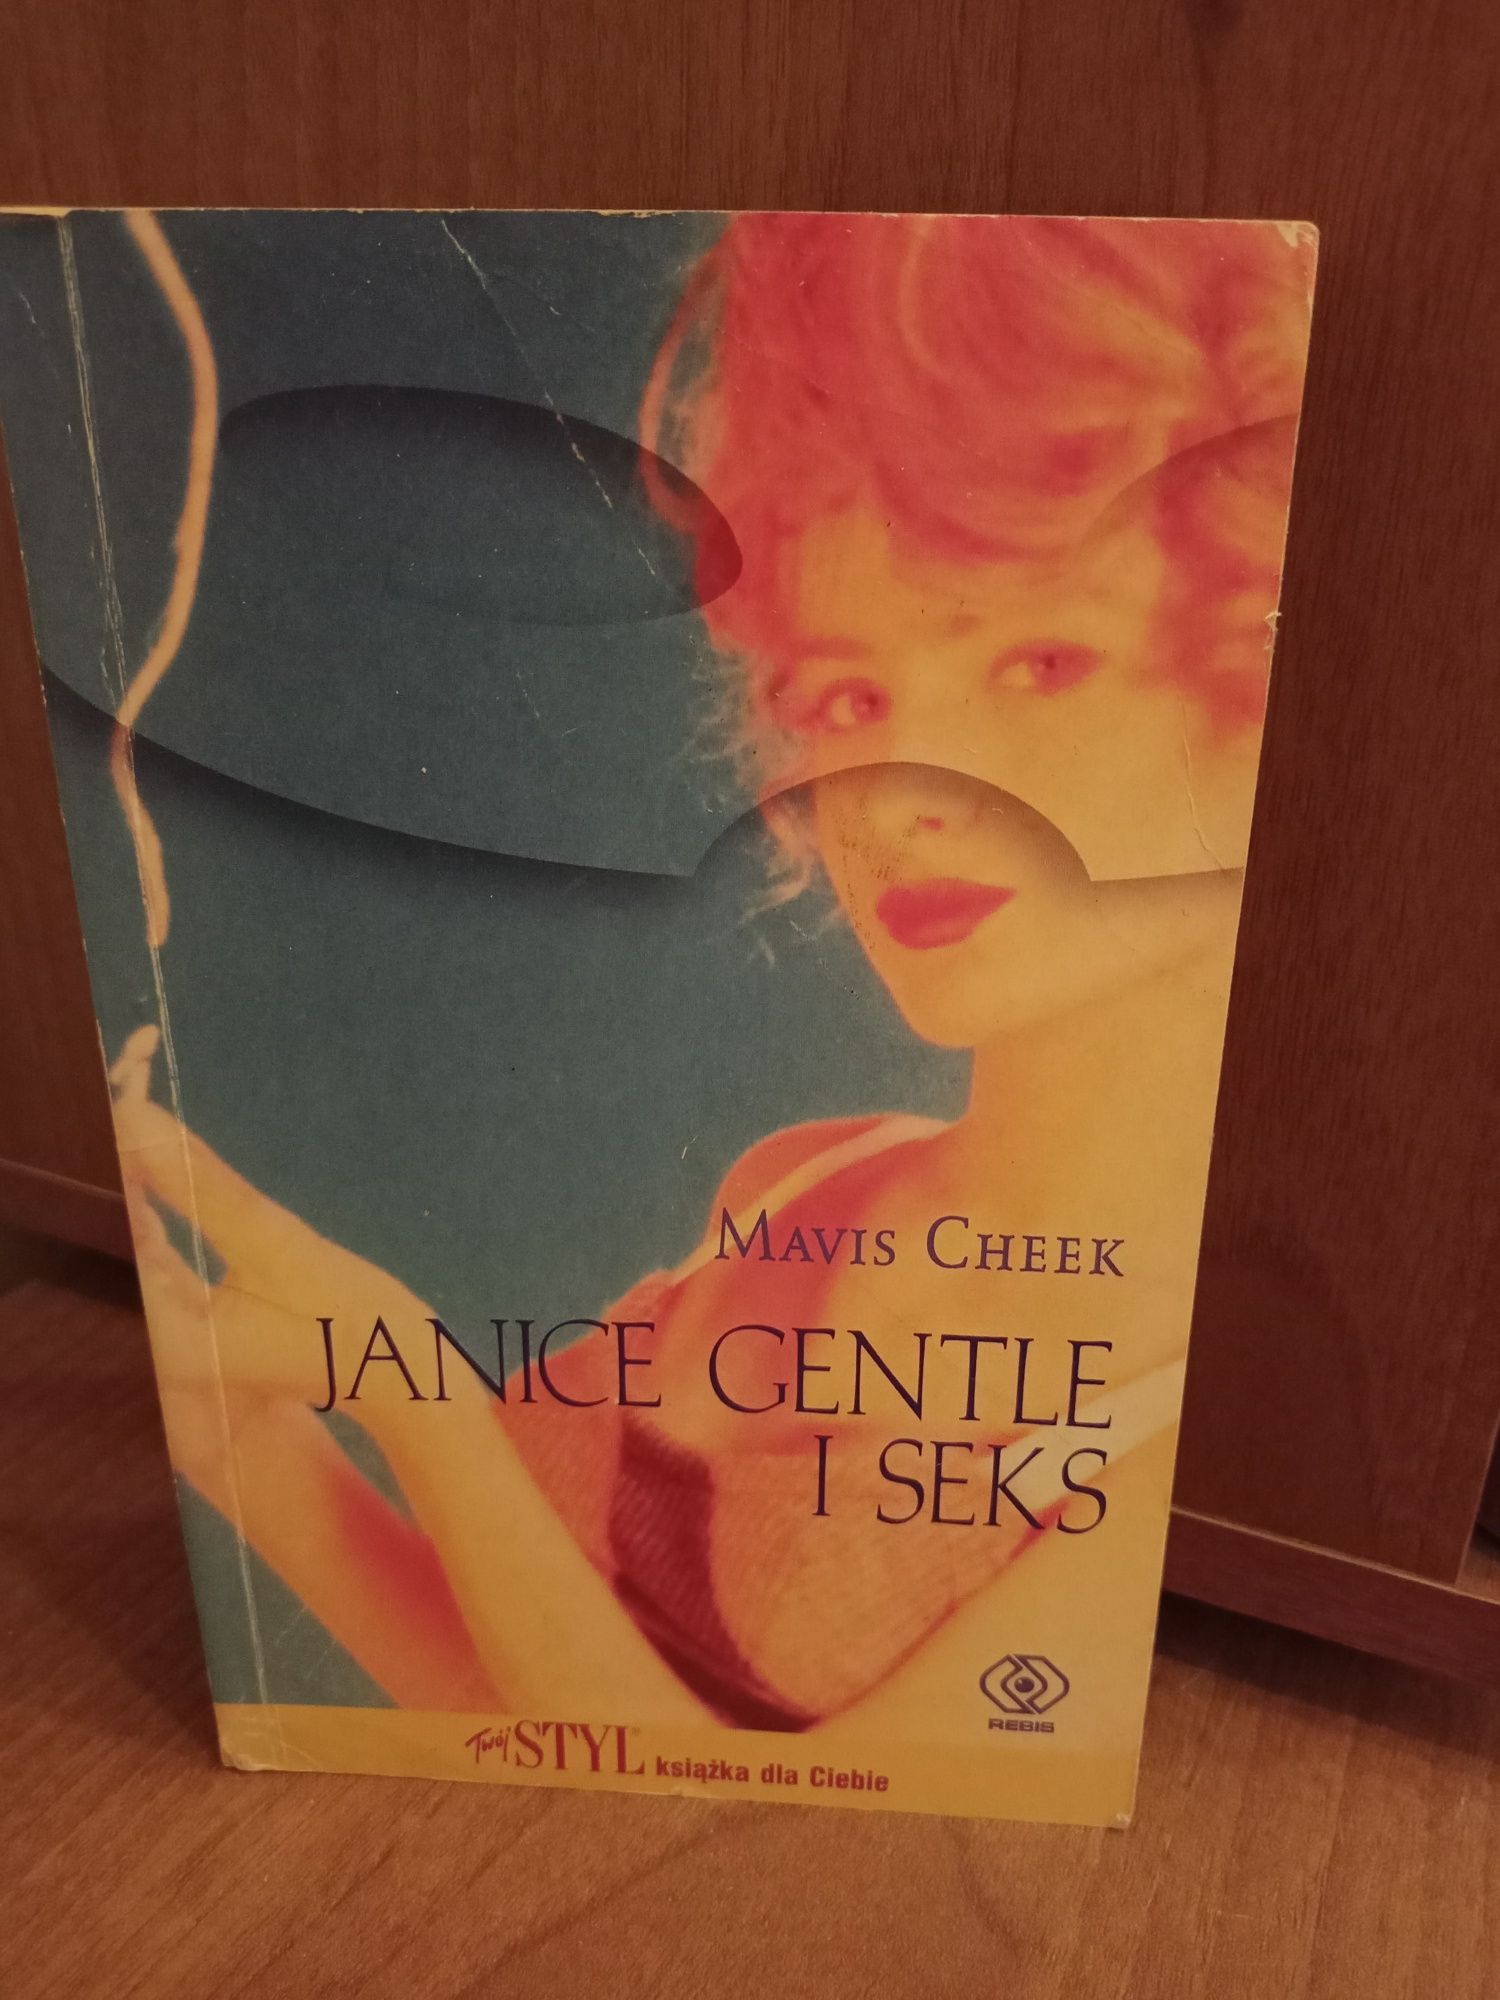 Książka "Janice Gentle i seks" Mavis Cheek